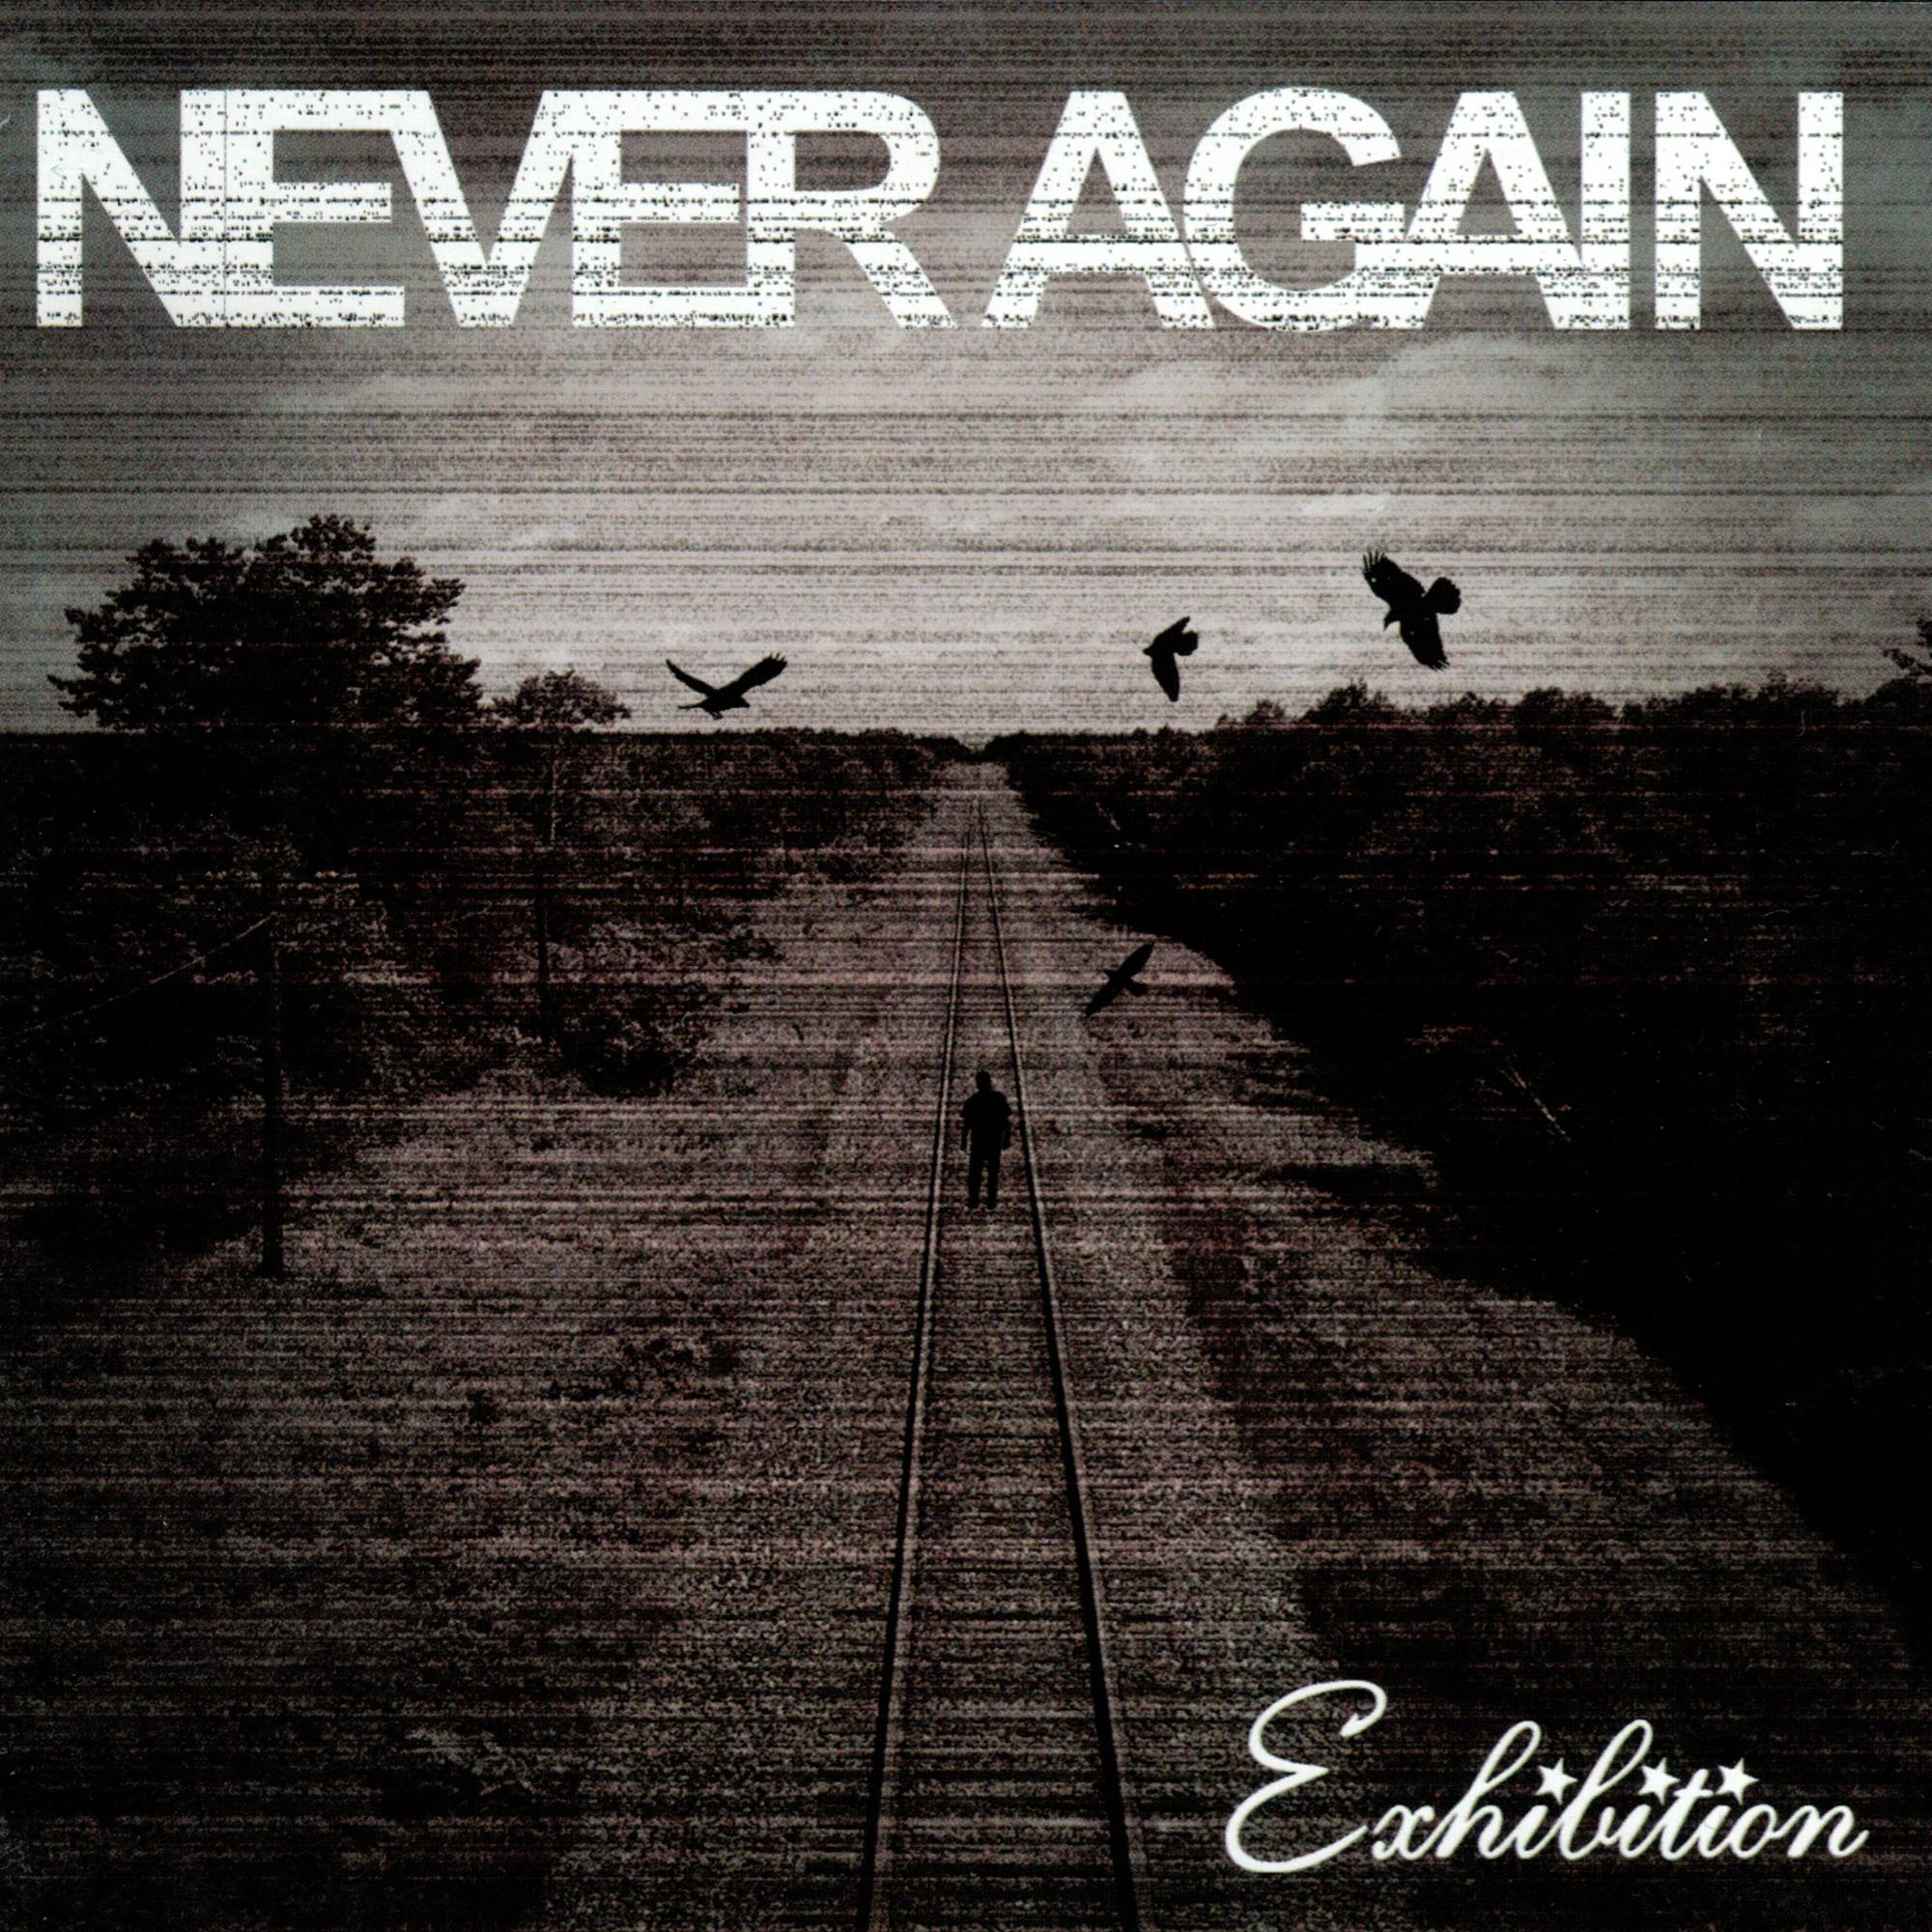 Never Again CD